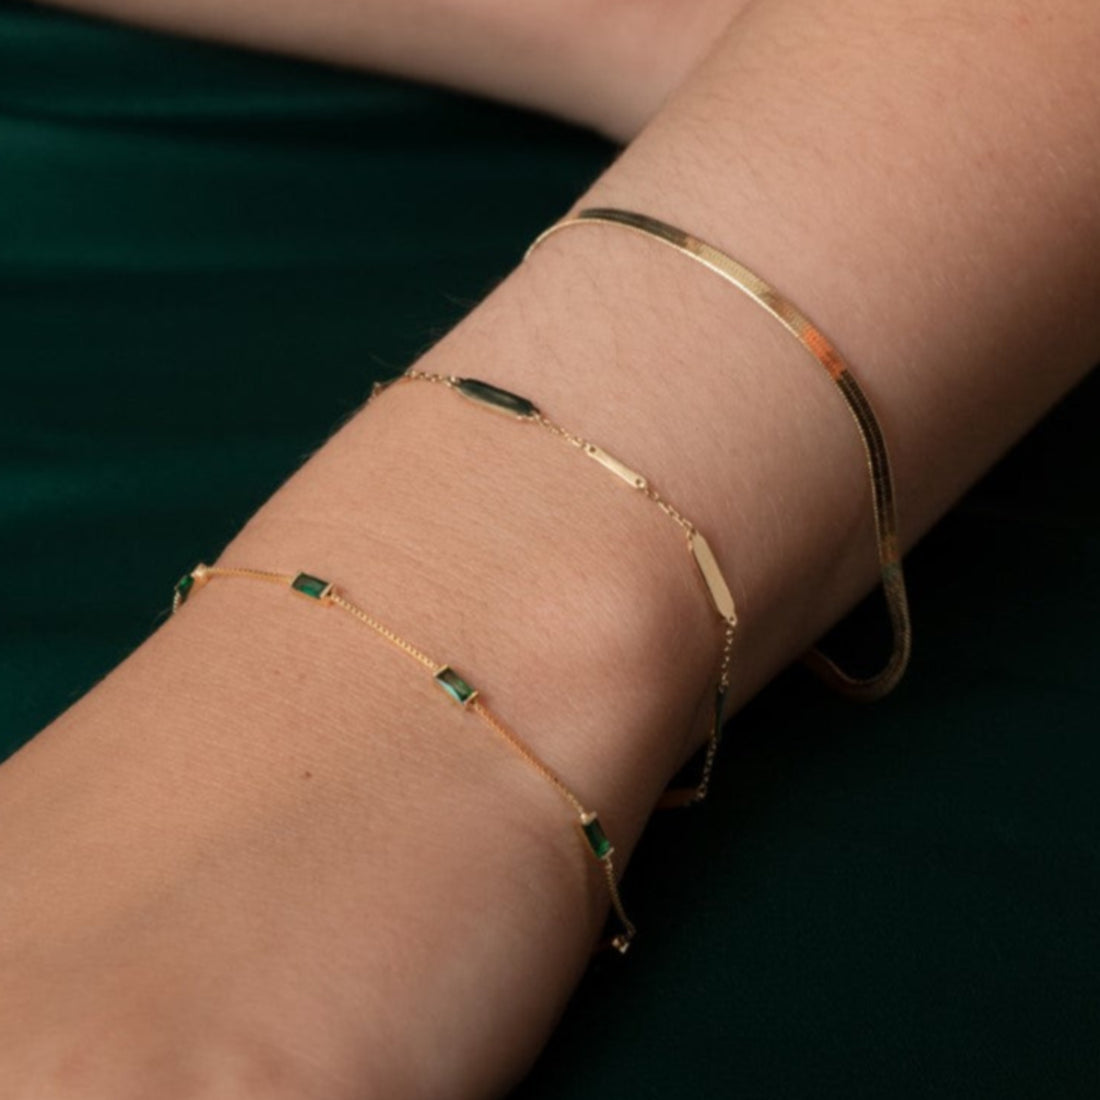 Emerald CZ Baguette Necklaced Bracelet